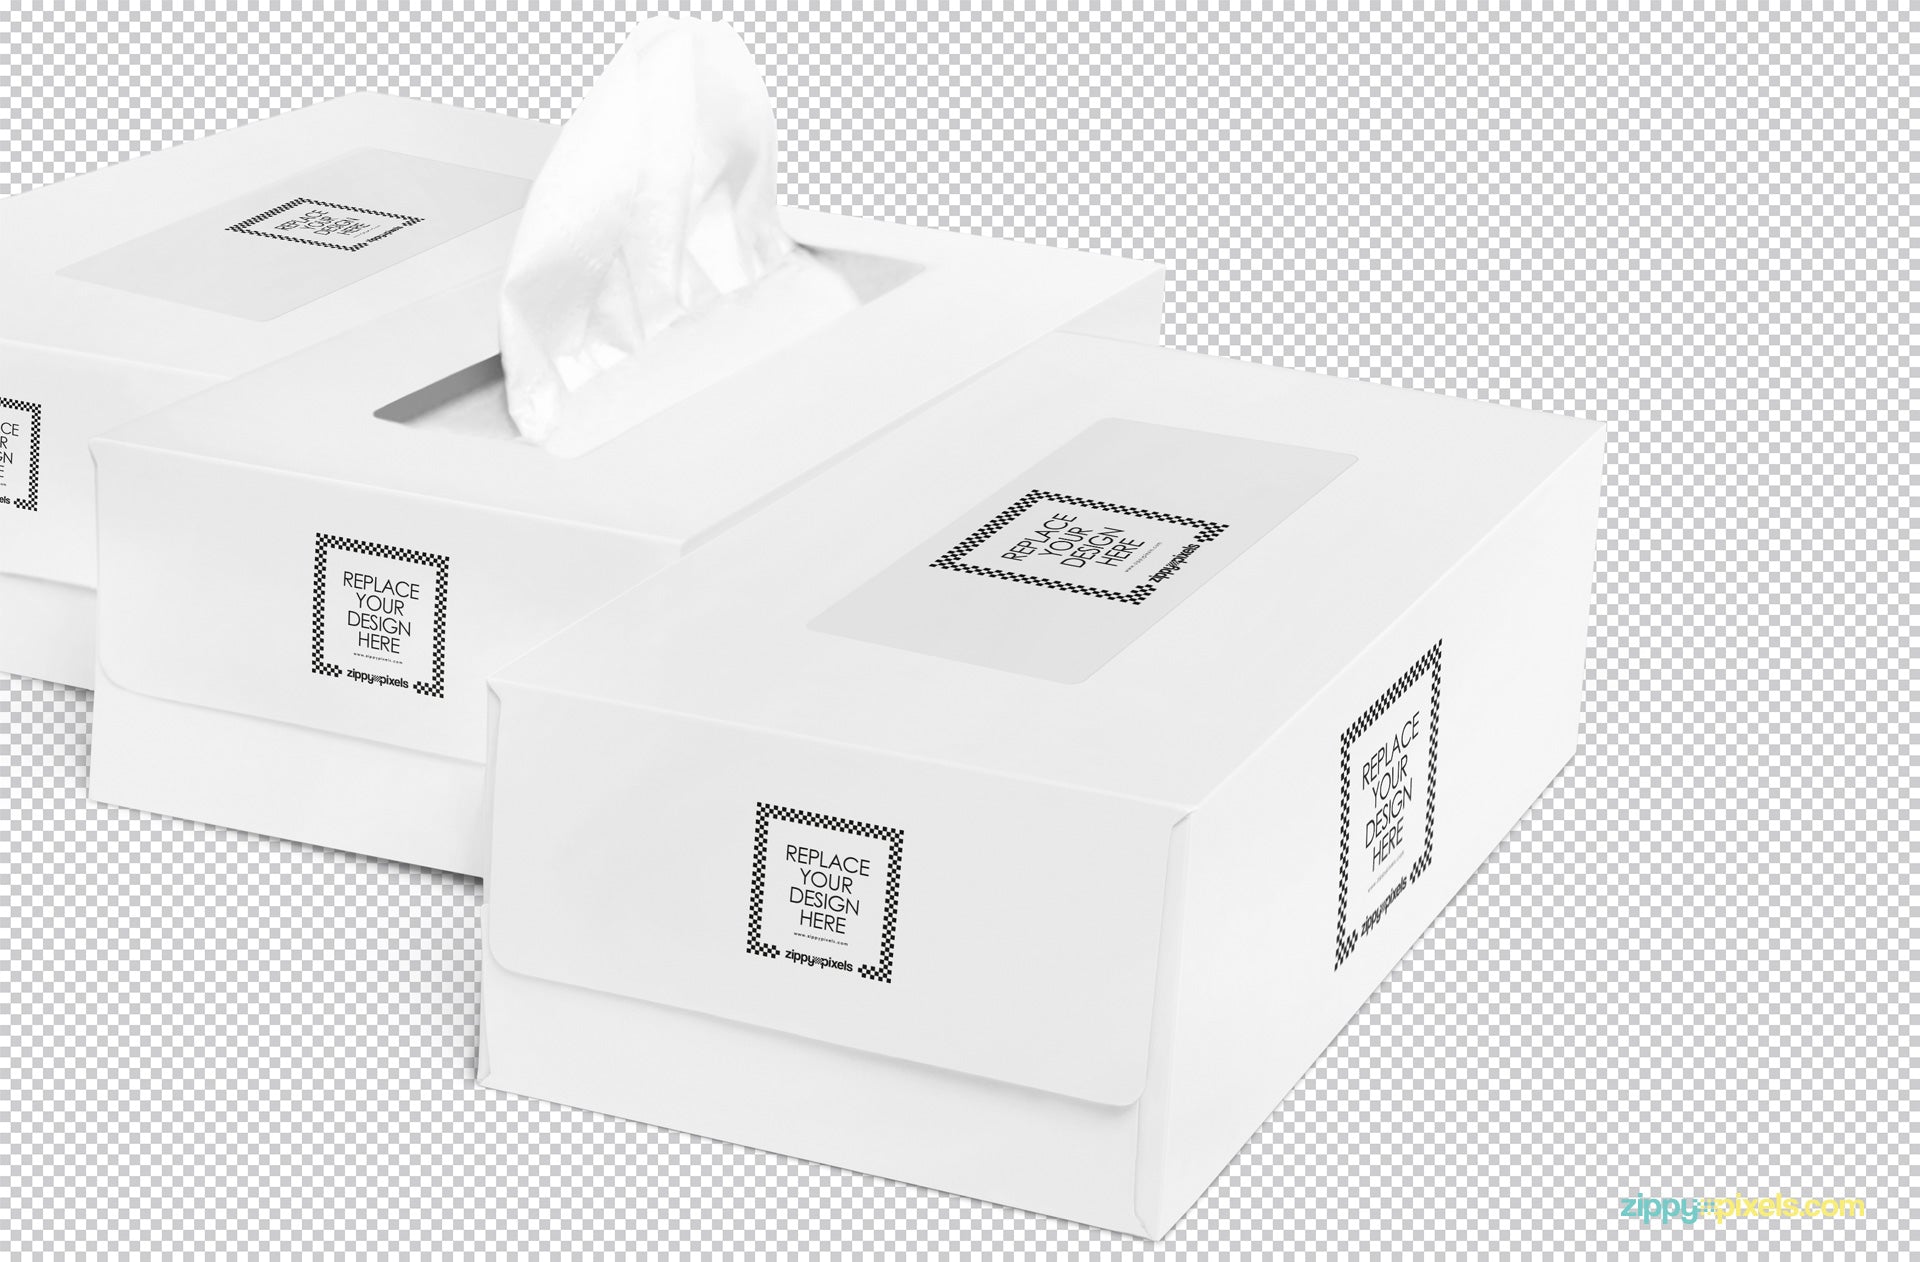 Download Free Luxury Tissue Box Mockup - CreativeBooster